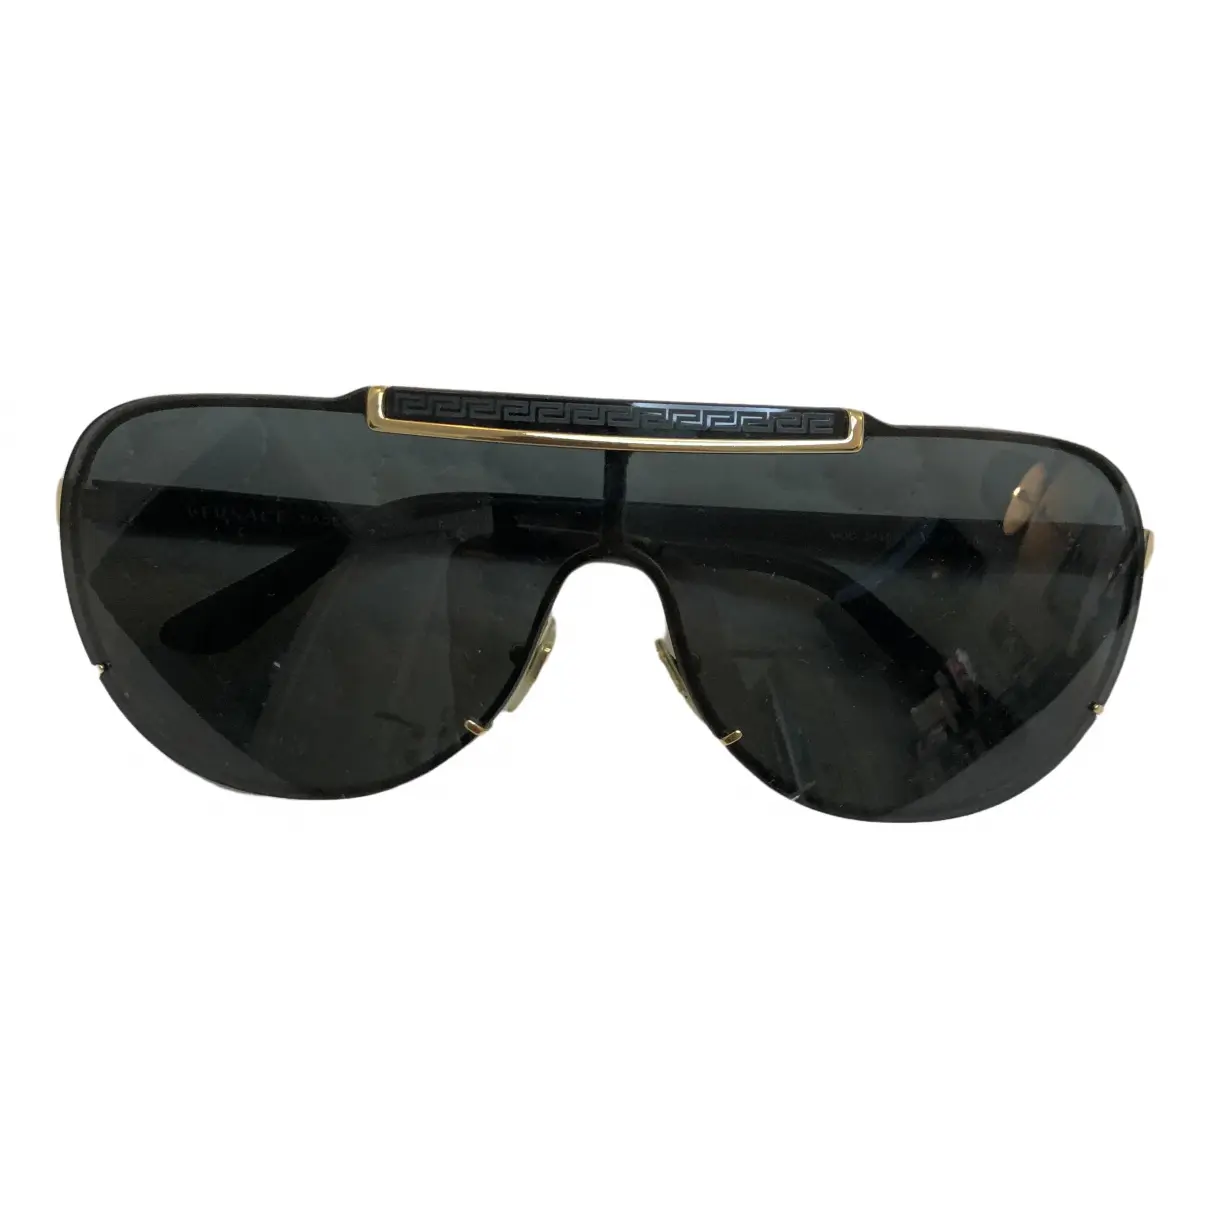 Aviator sunglasses Versace - Vintage